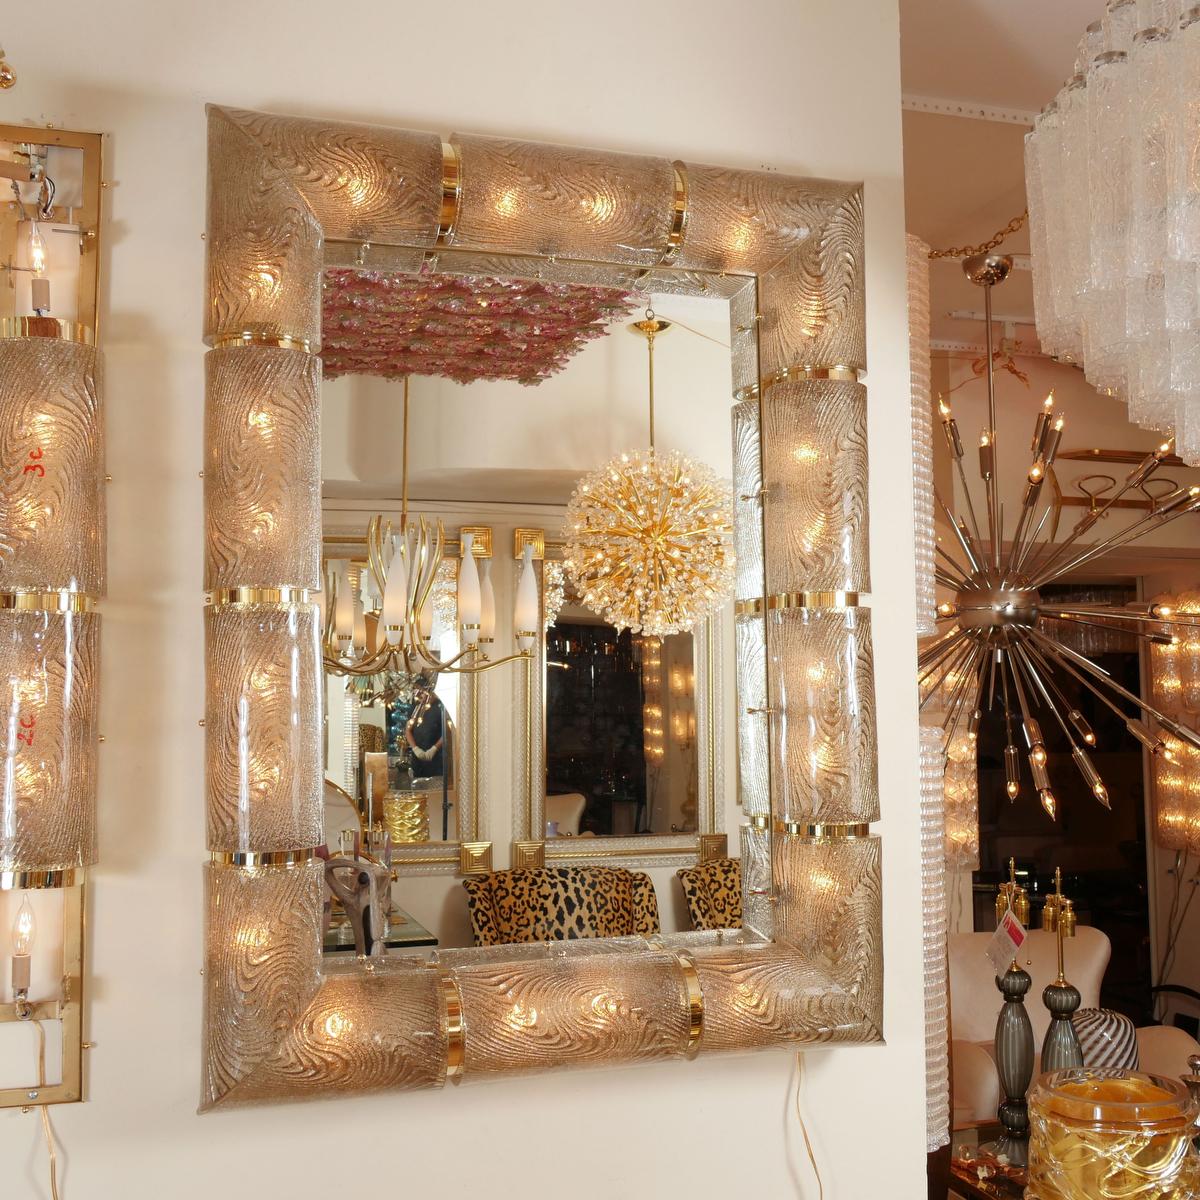 Rectangular illuminated mirror with textured glass surround and decorative brass details.